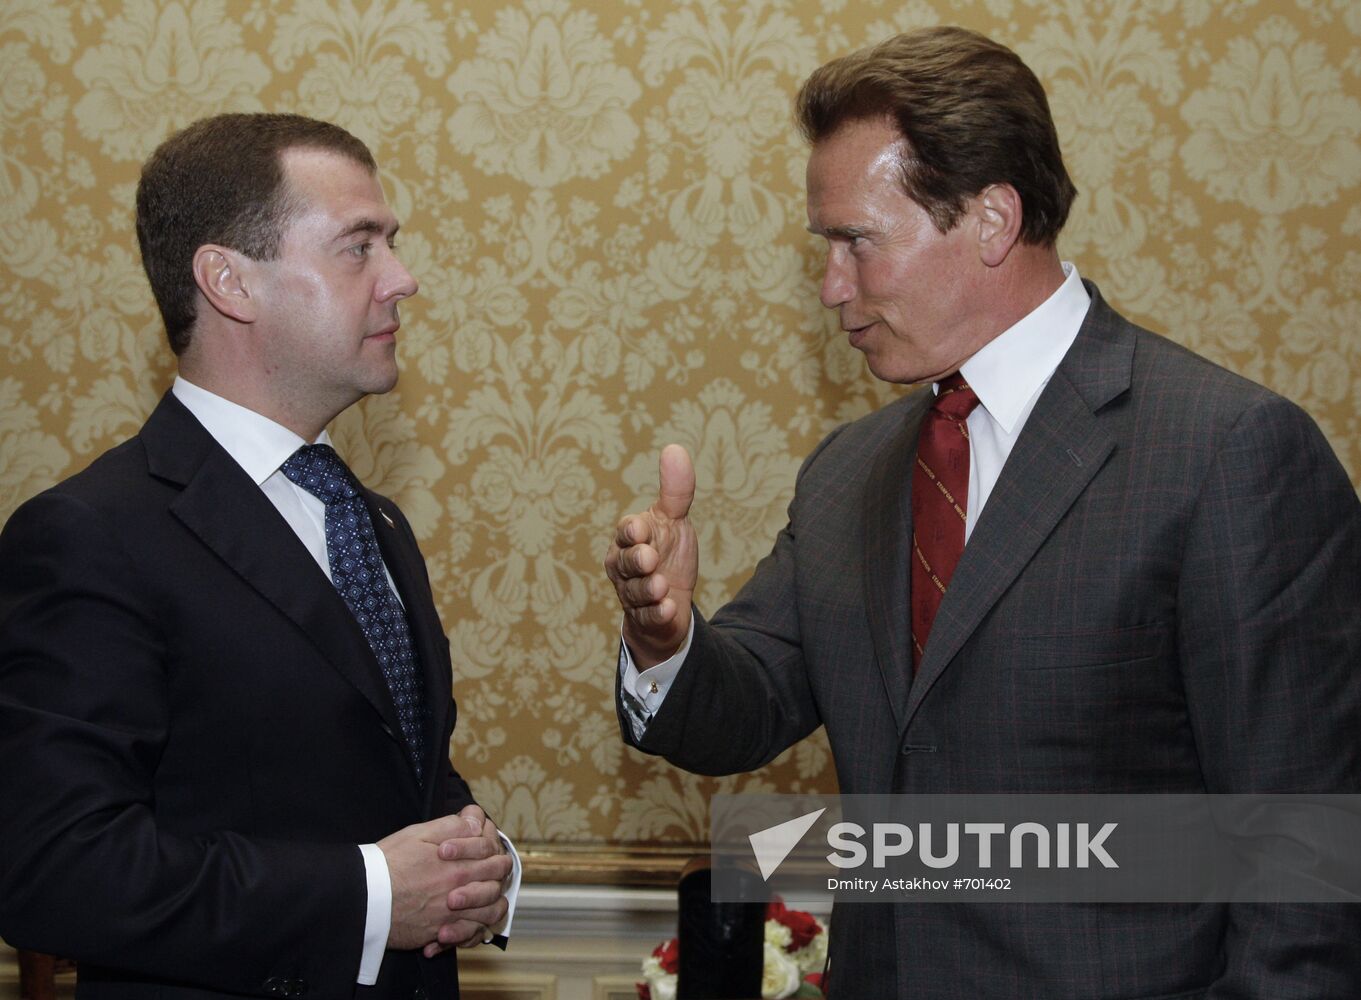 Dmitry Medvedev and his wife, Svetlana, visit the U.S.